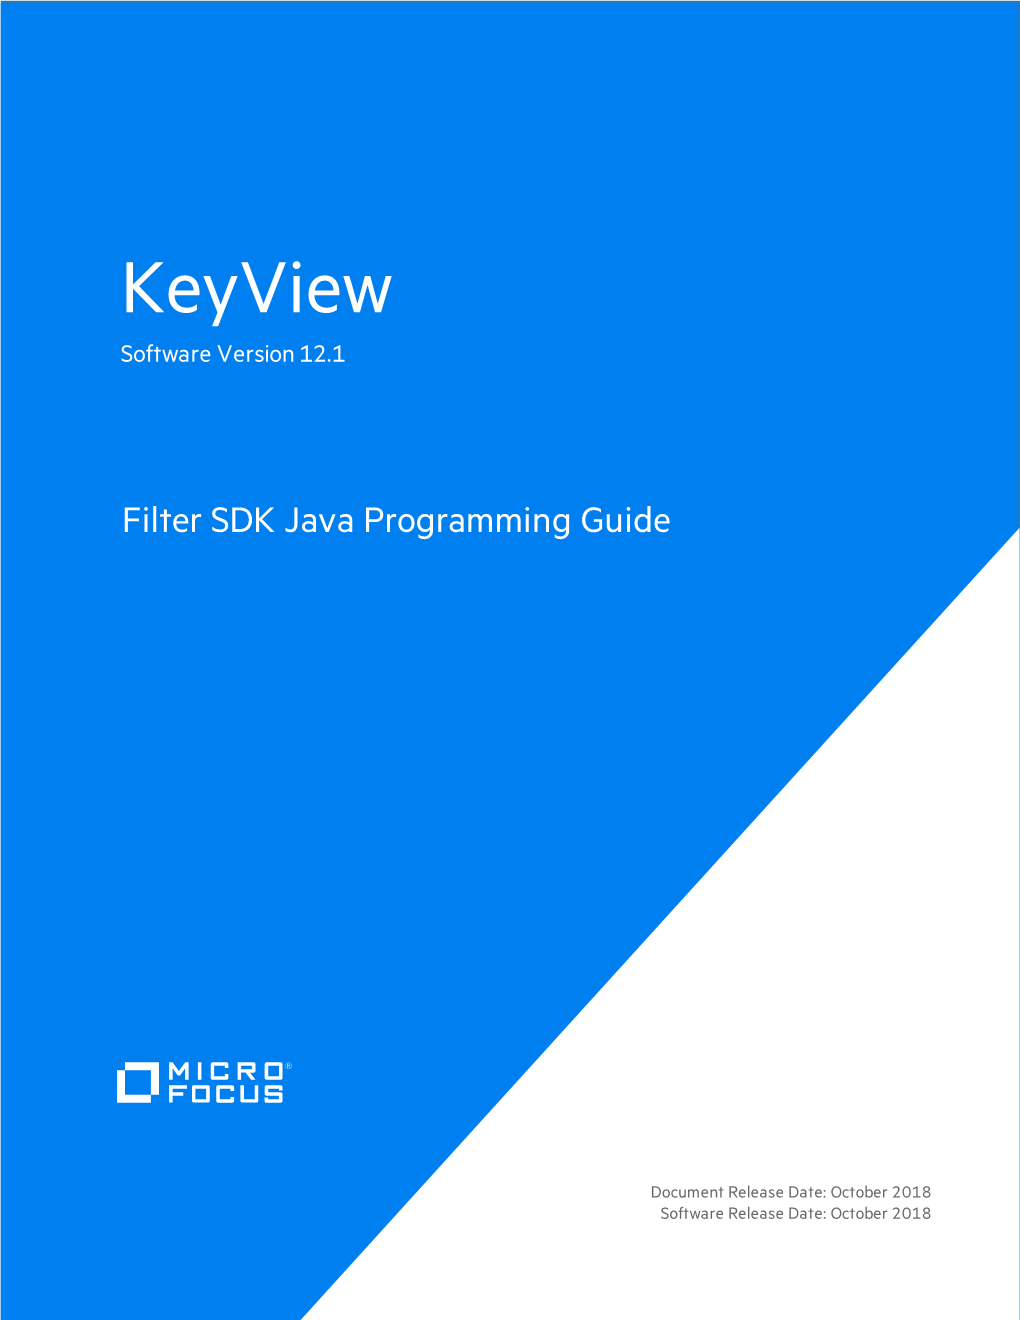 IDOL Keyview Filter SDK 12.1 Java Programming Guide